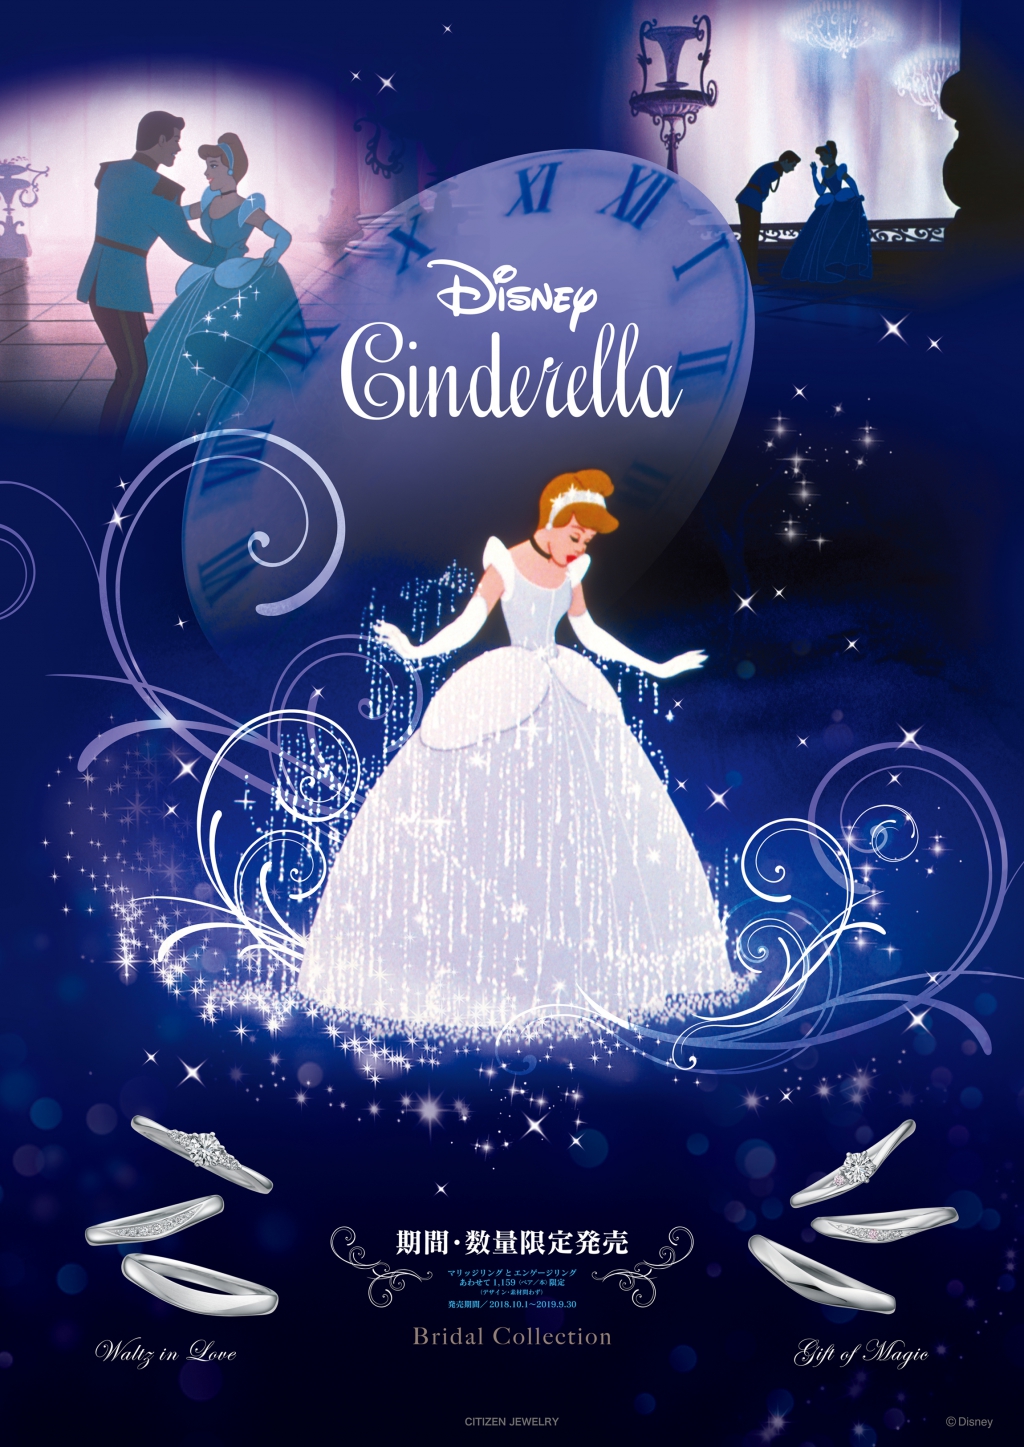 Disney CinderellaãCITIZENï¼ã·ããºã³ï¼